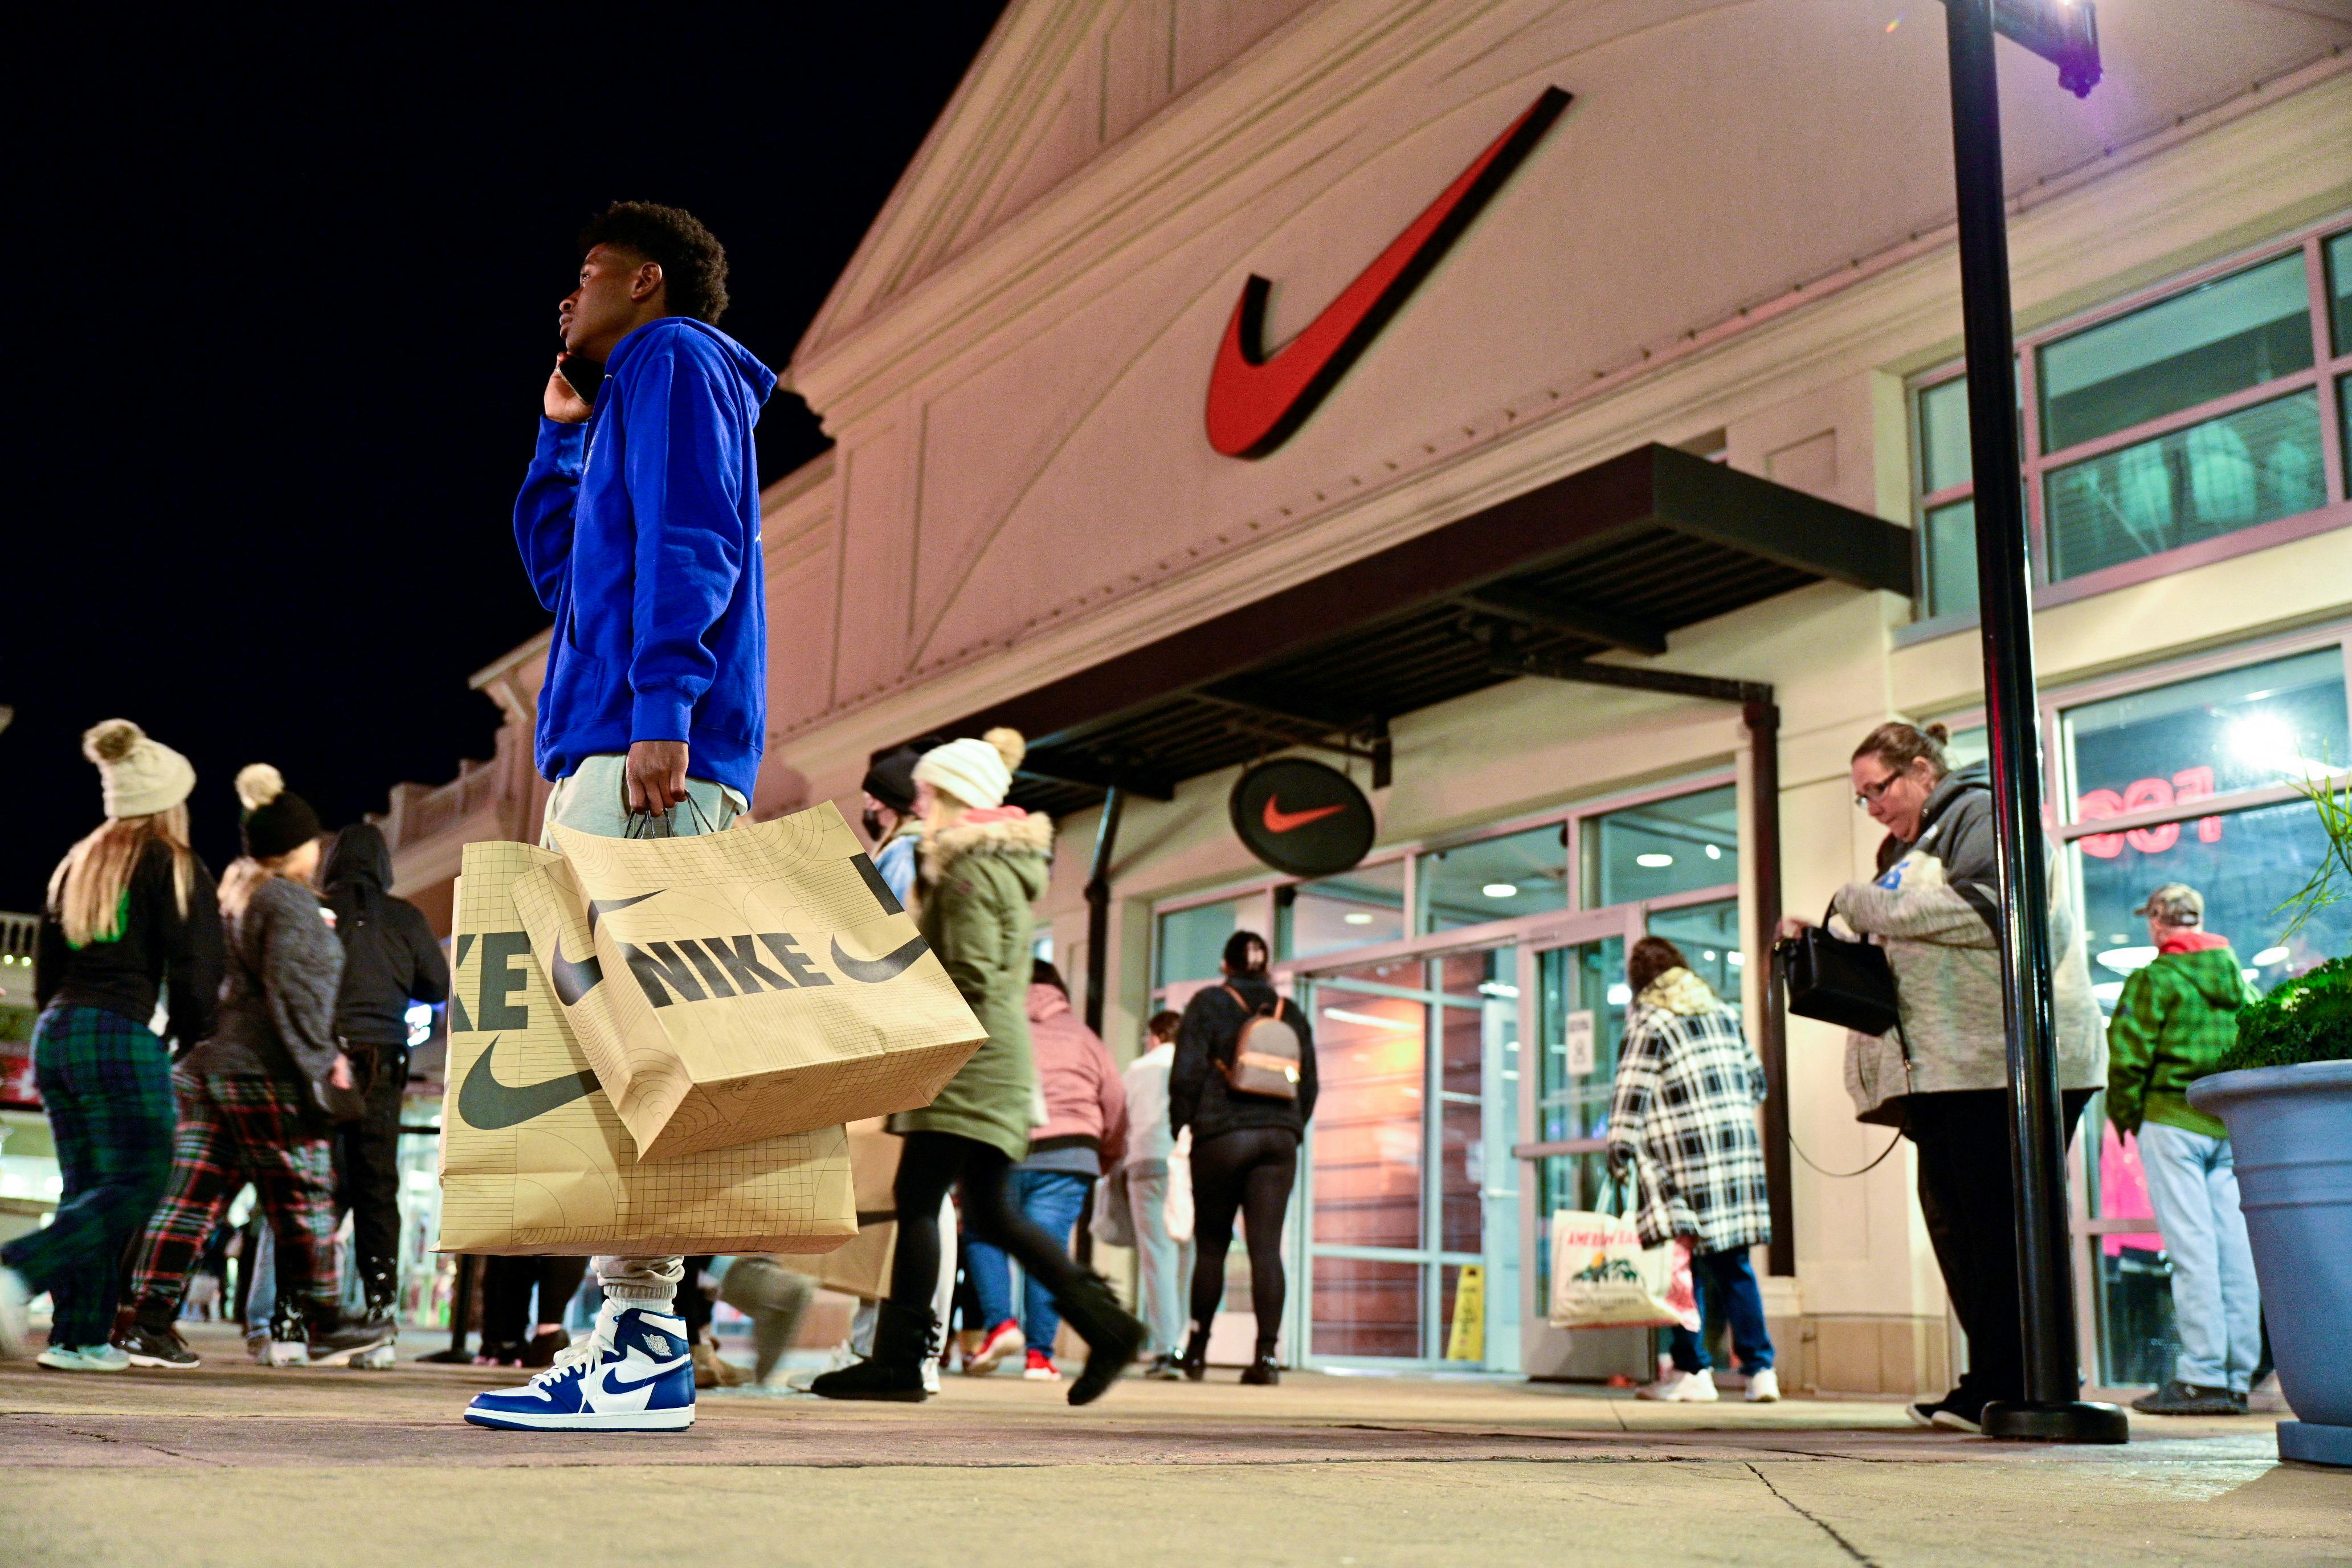 Nike's powerhouse labels lose footing against upstart brands - analysts